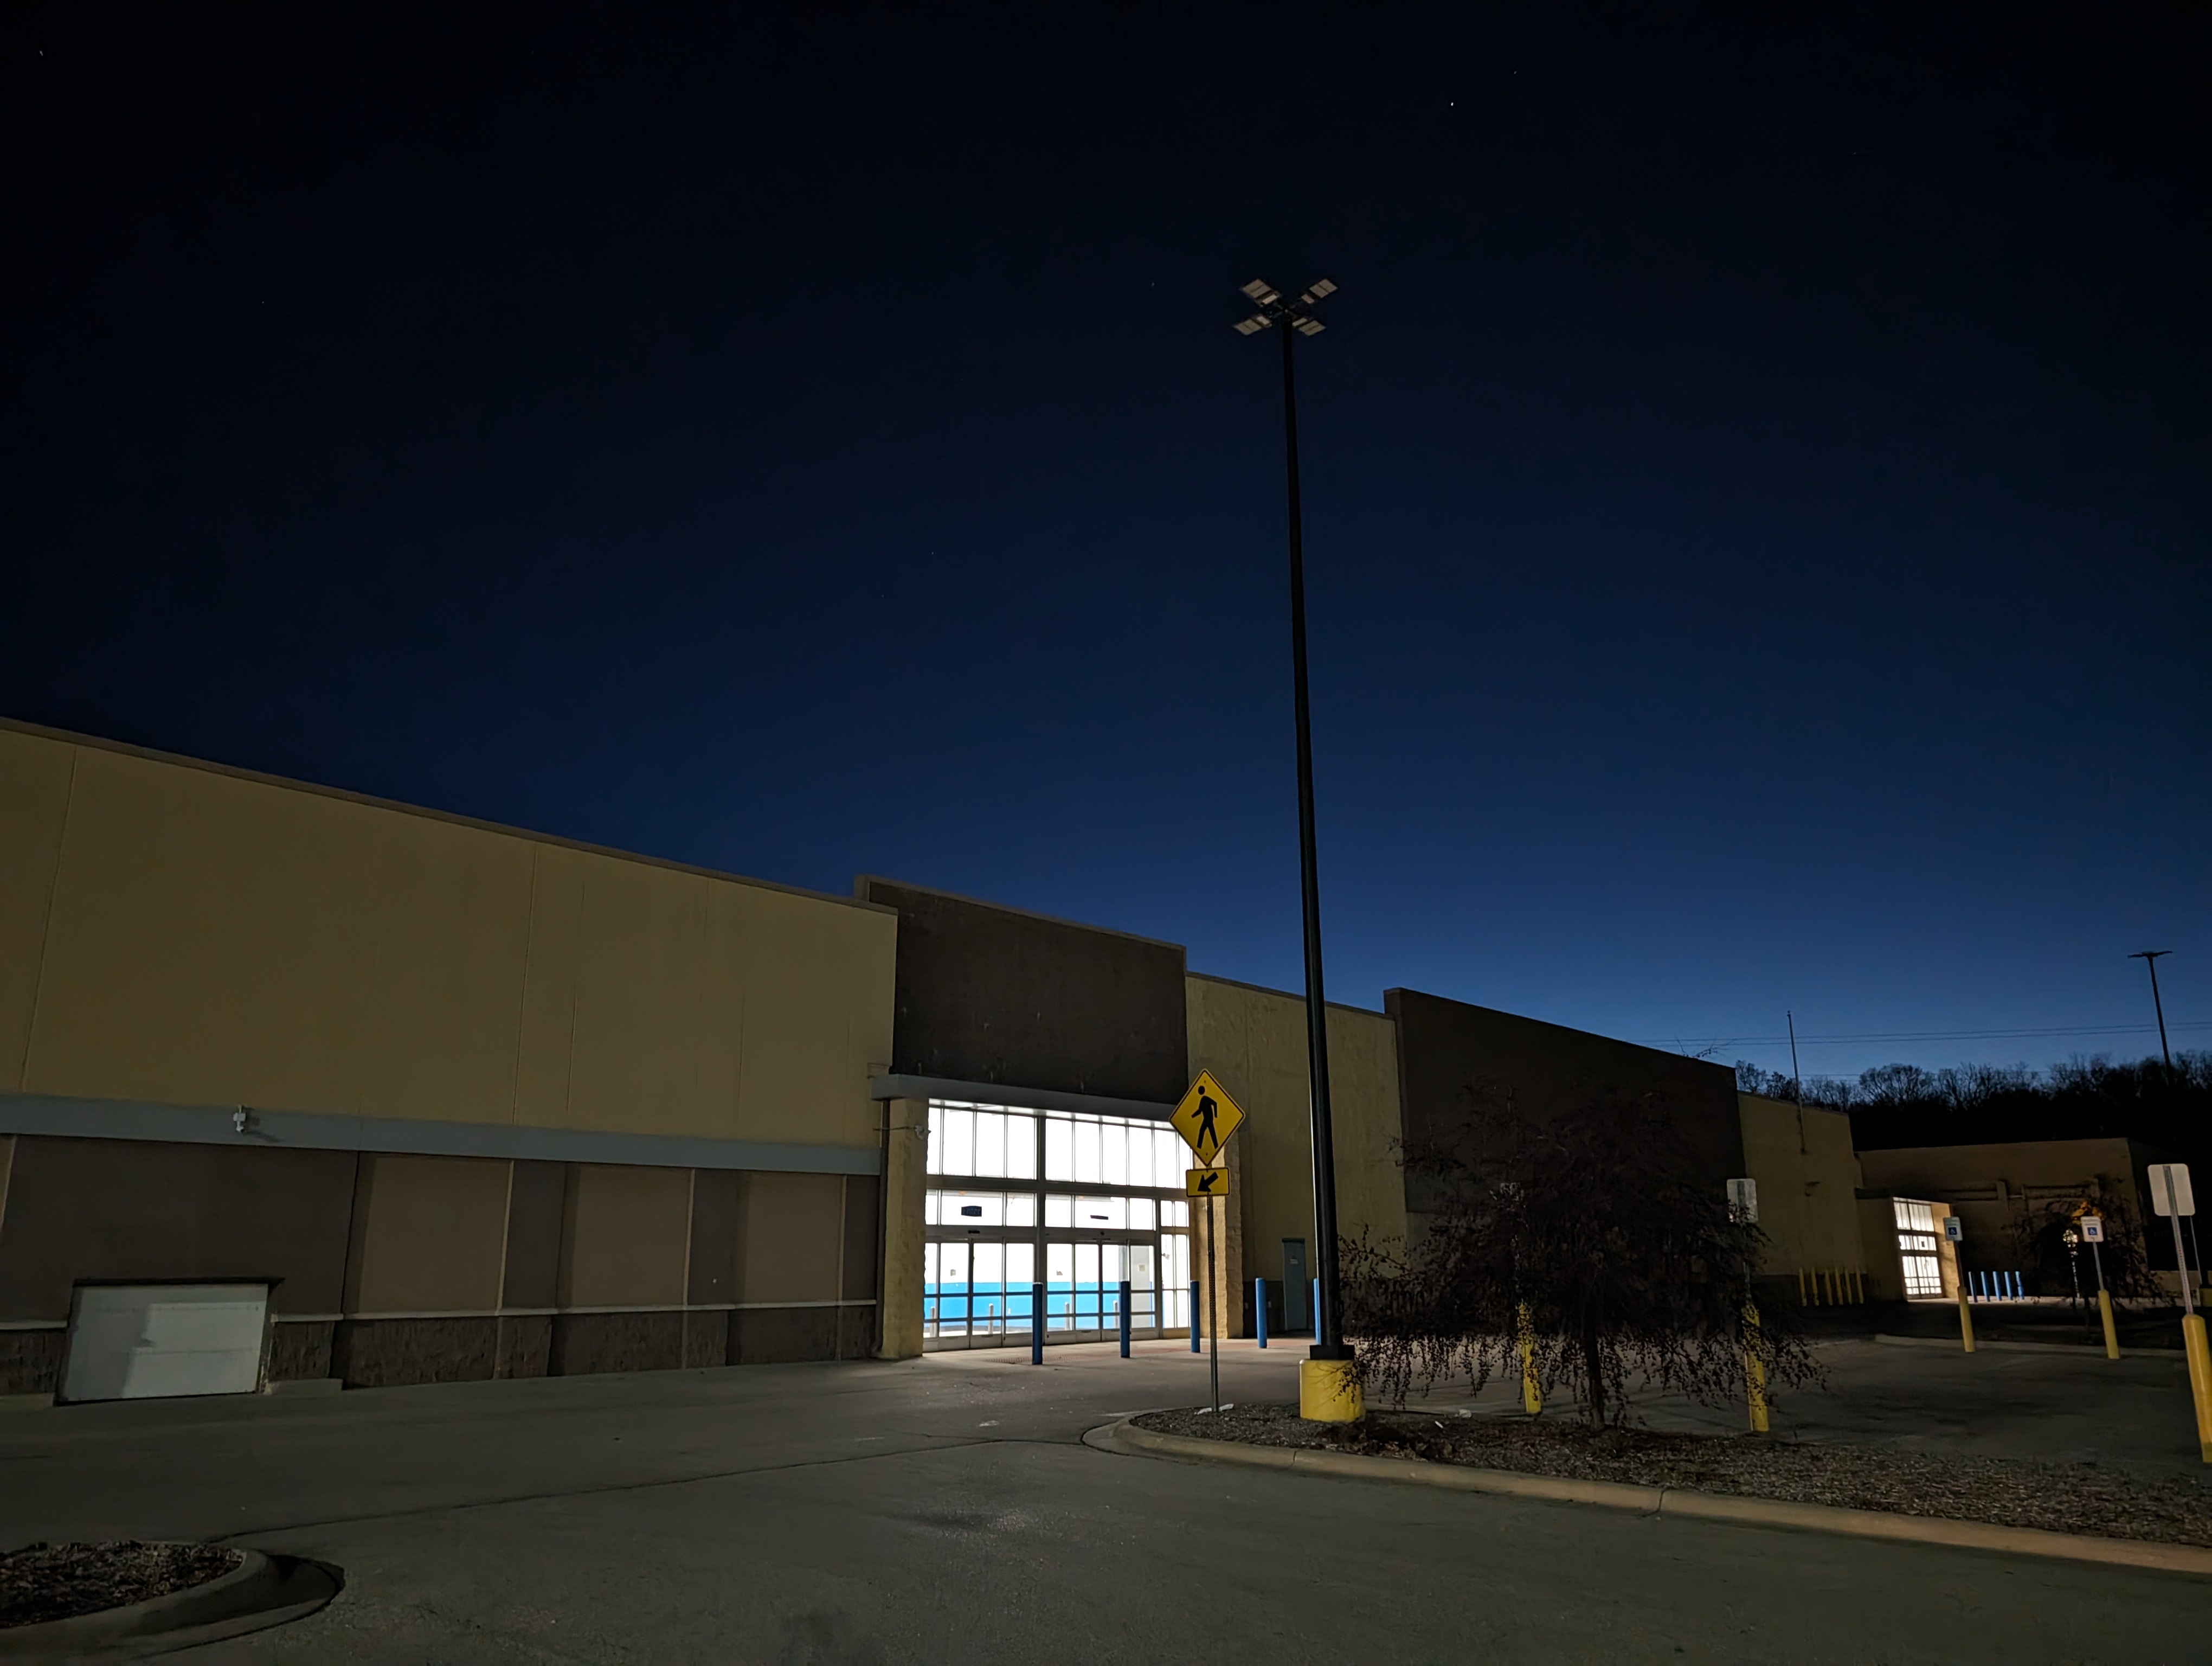 Walmart Supercenter - Big Box Store